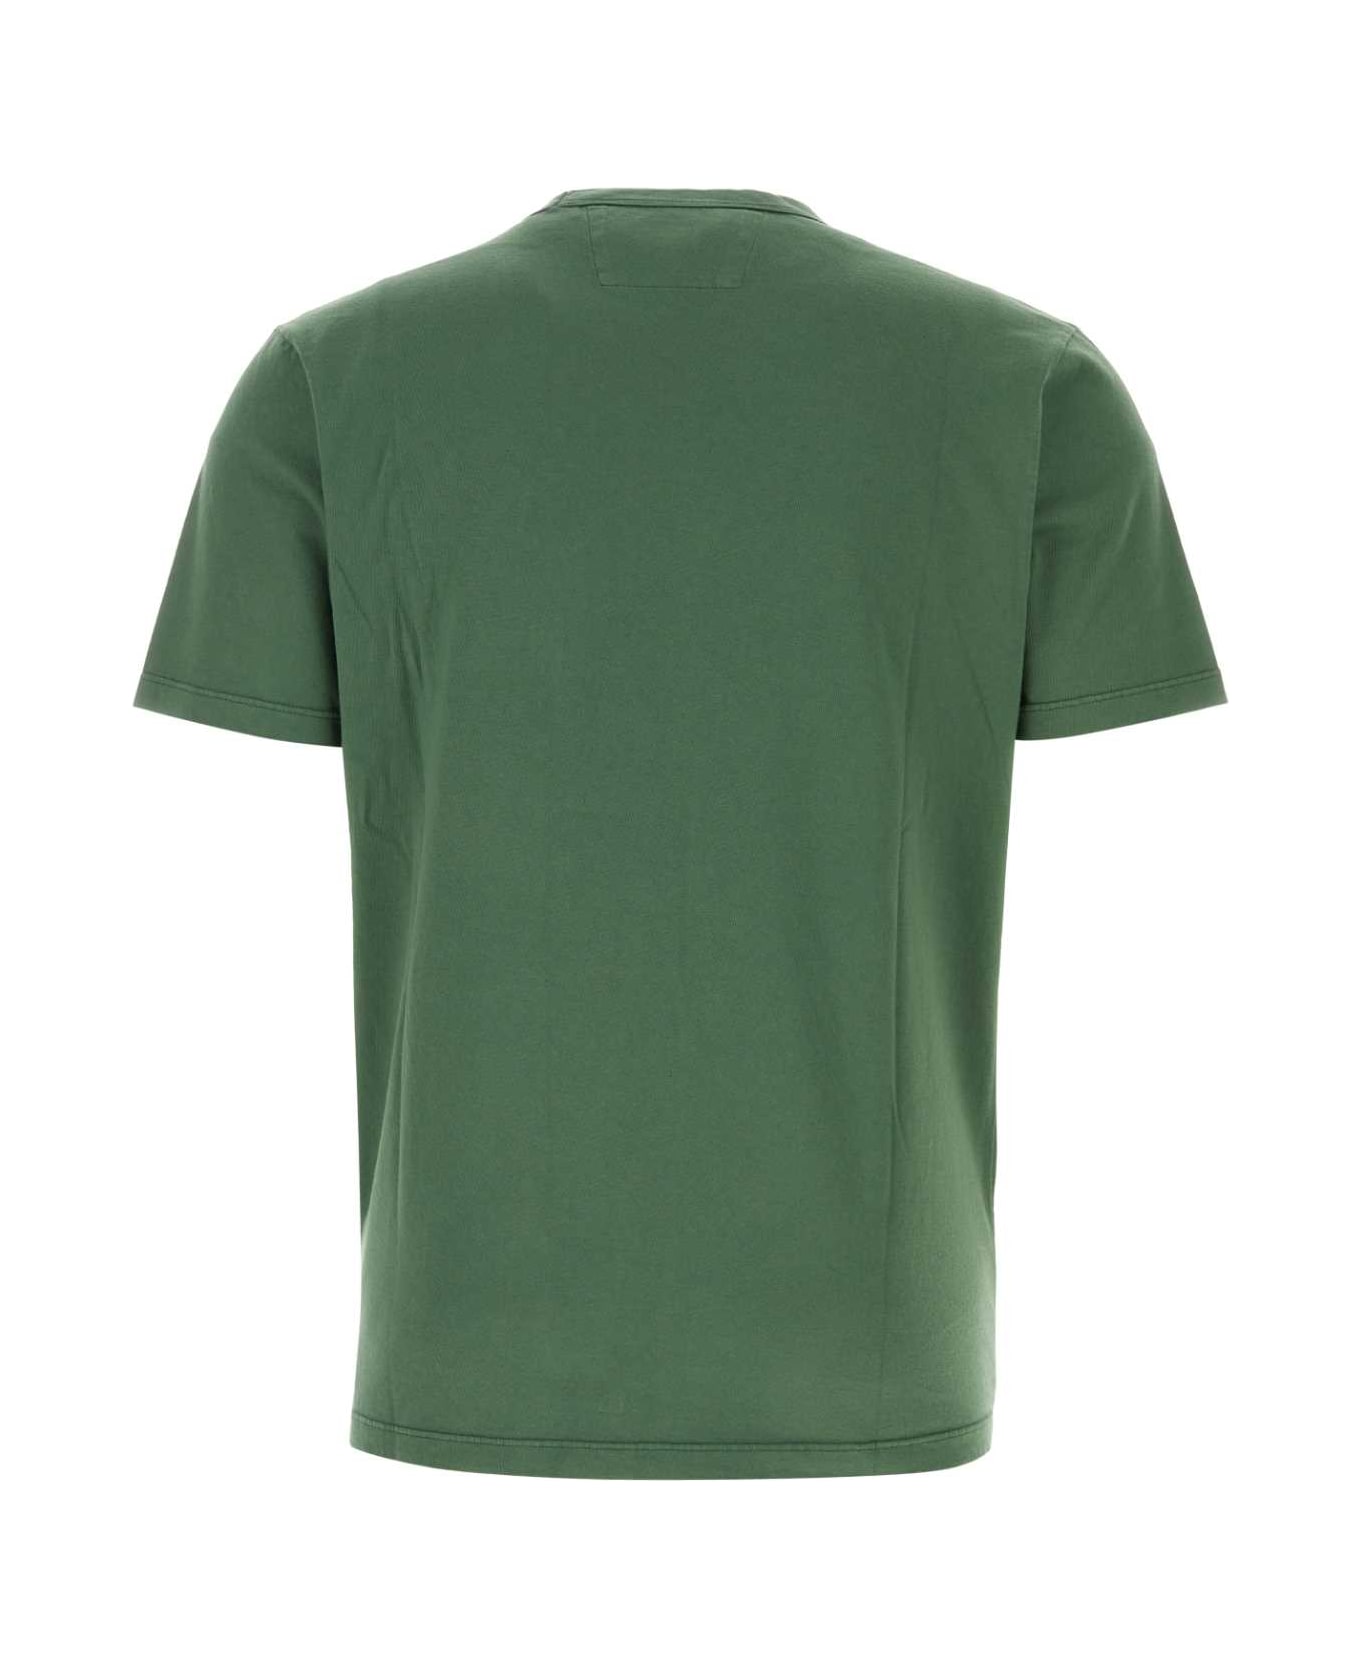 C.P. Company Green Cotton T-shirt - DUCKGREEN